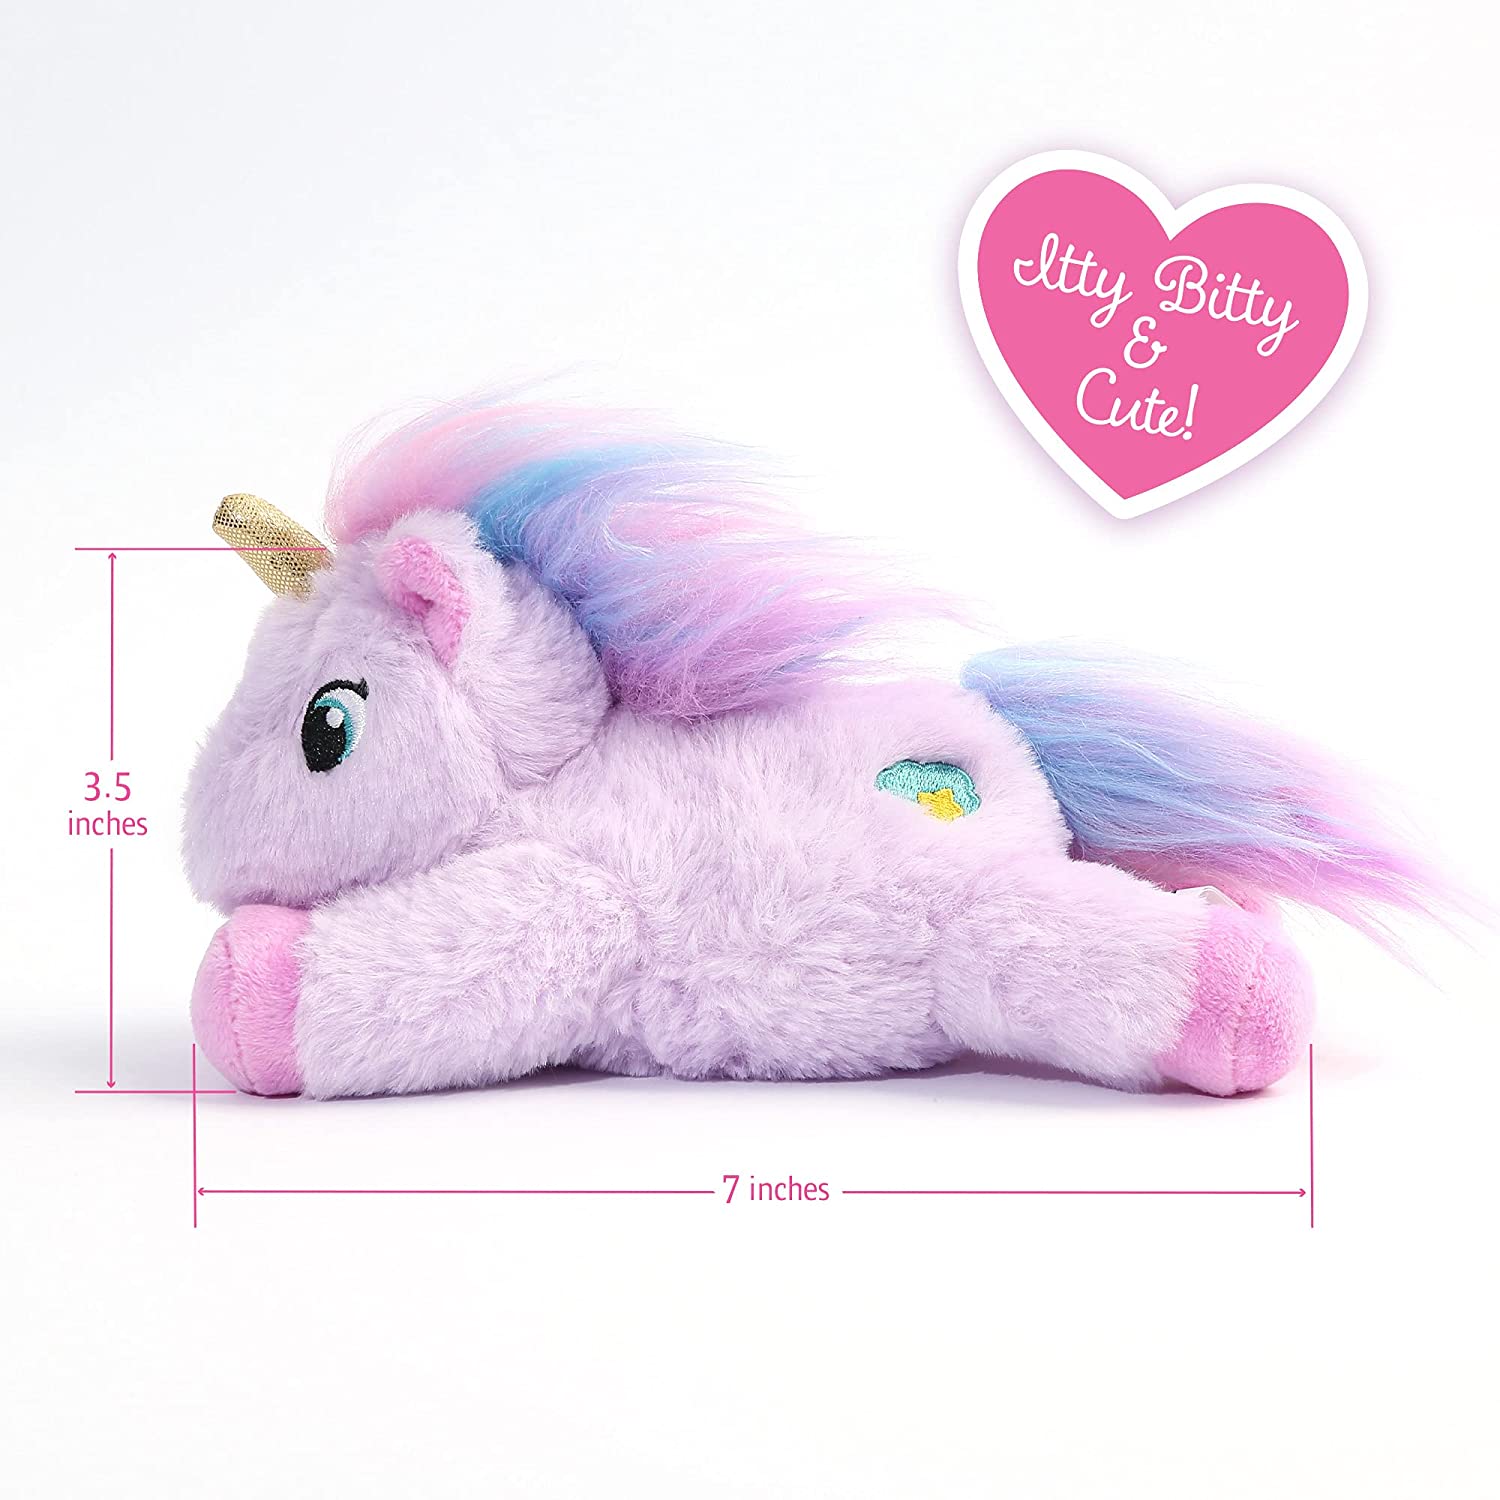 LotFancy 2 Pcs 7 in Unicorn Stuffed Animal Plush Toys Gift for Kids Girls Boys, Purple and White - image 2 of 6